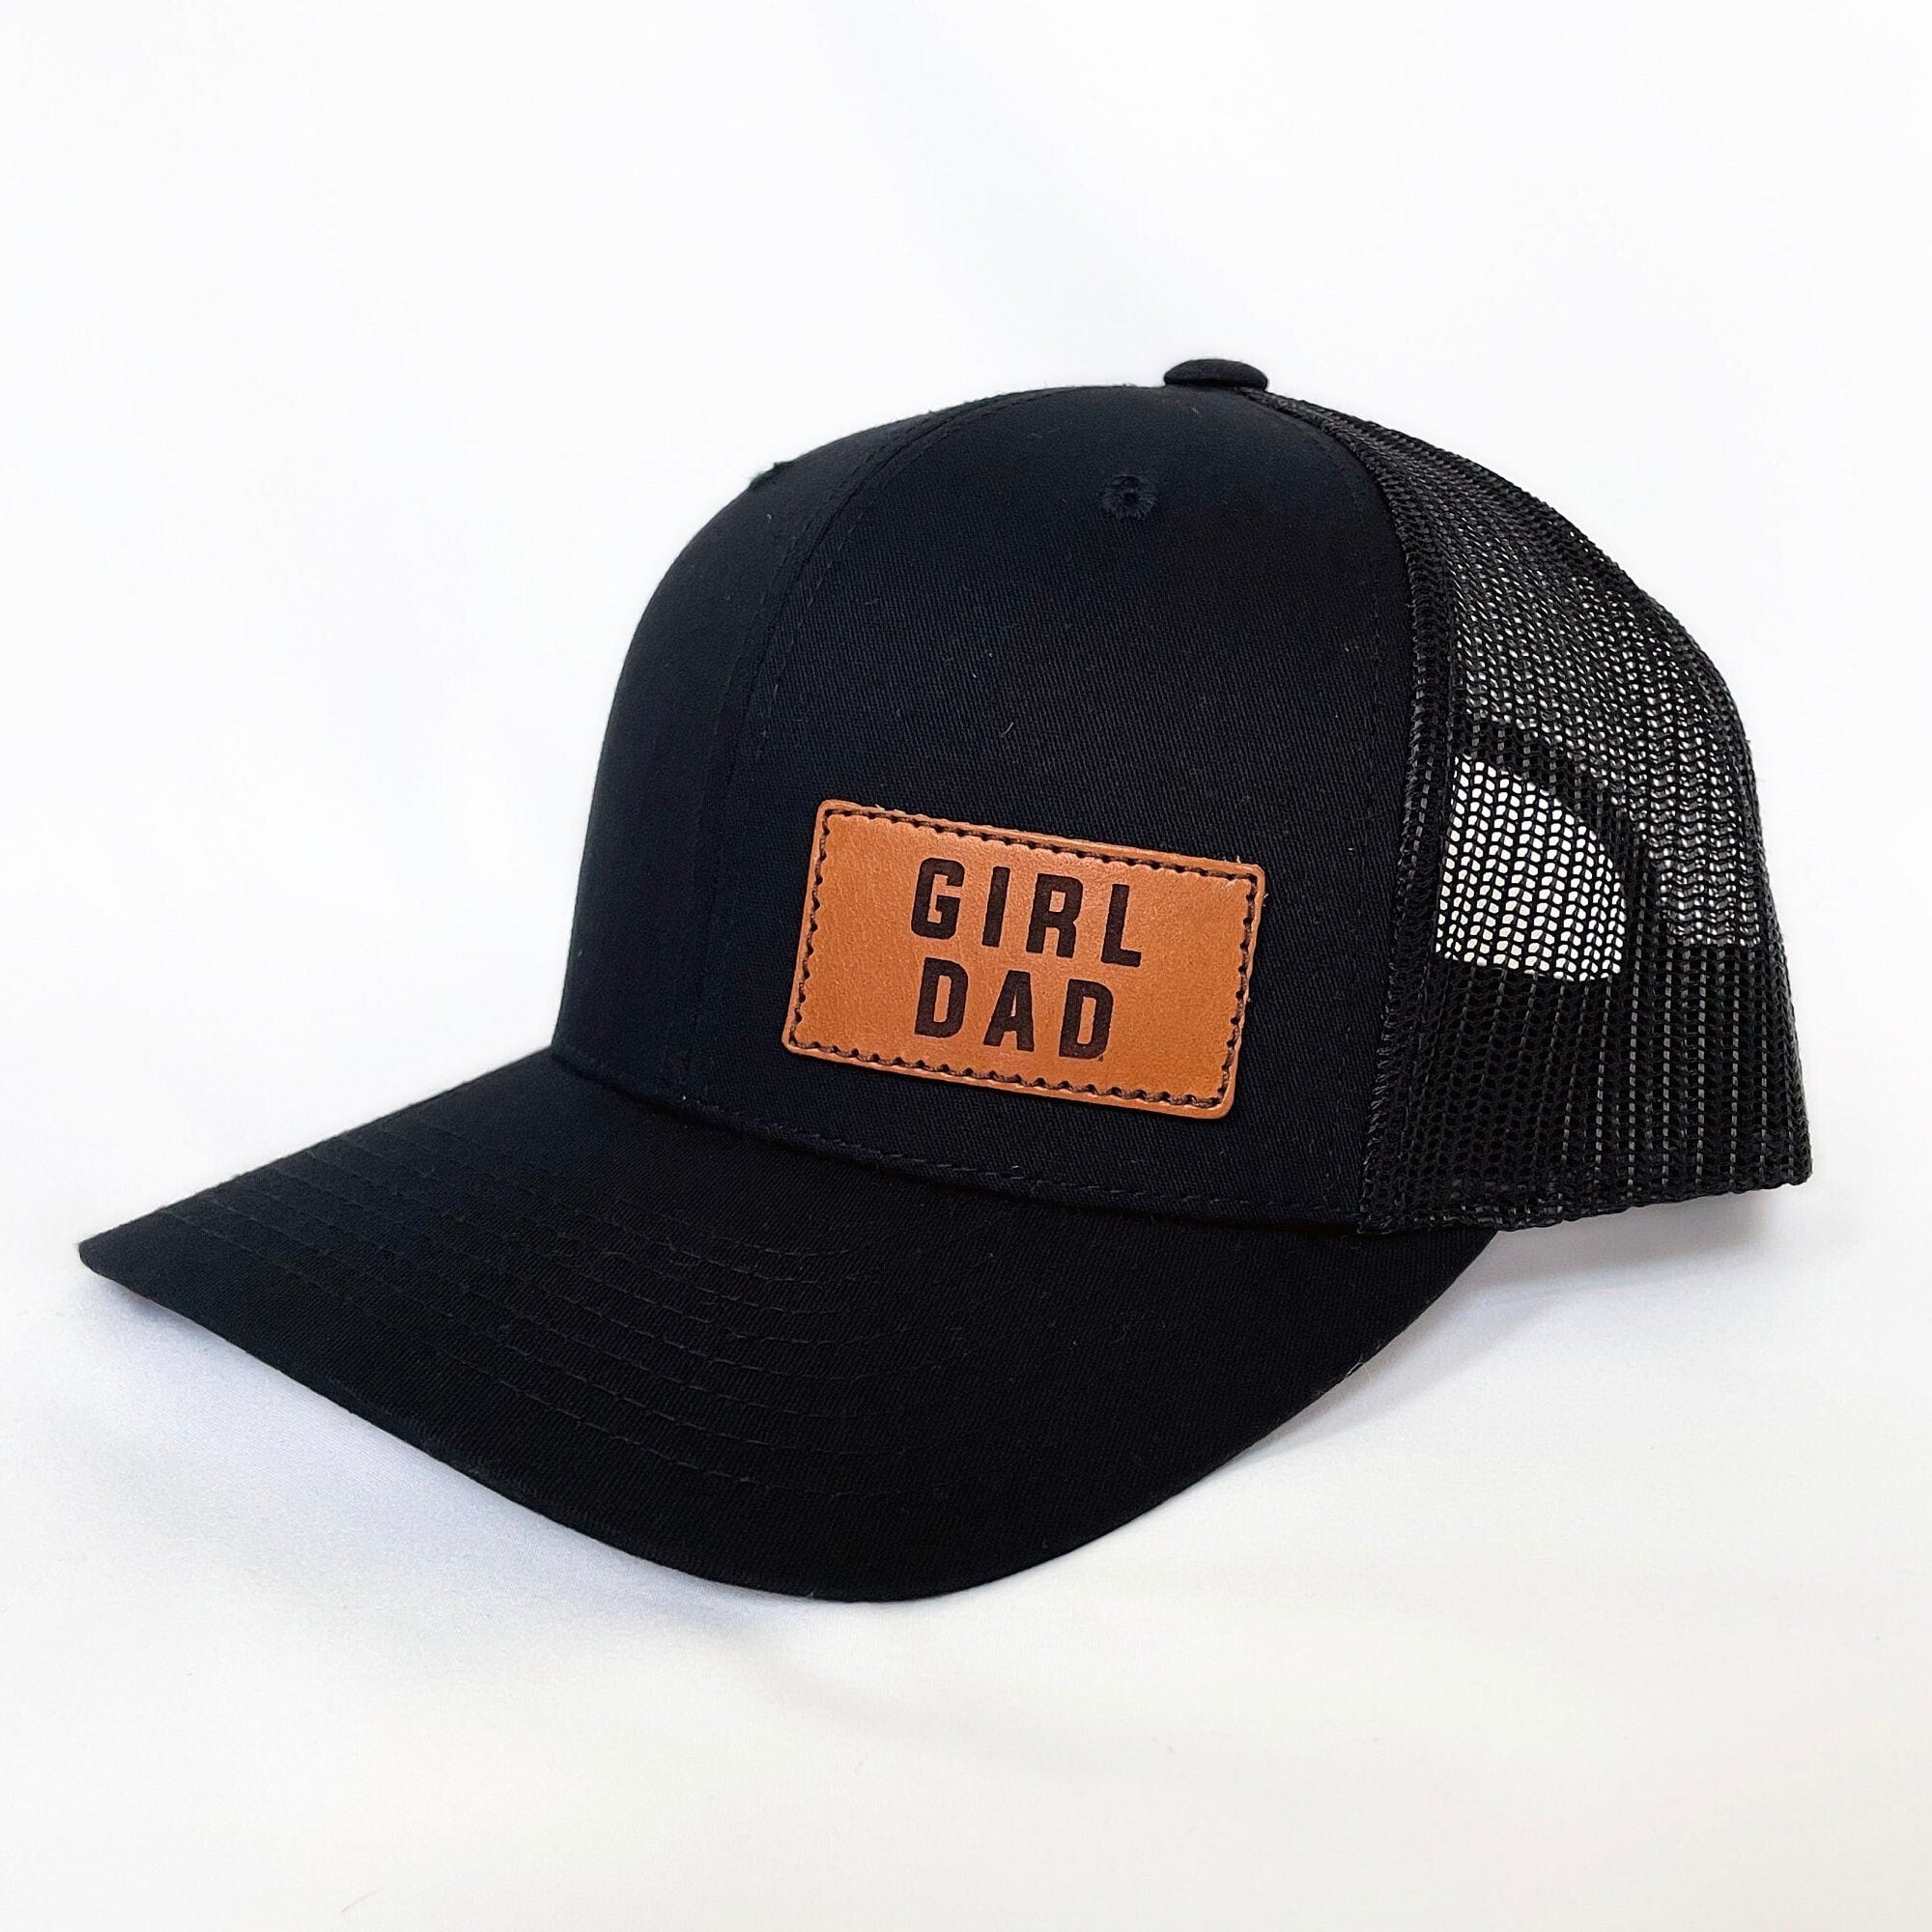 Girldad® Offset Black/Black Leather Patch Trucker Hat